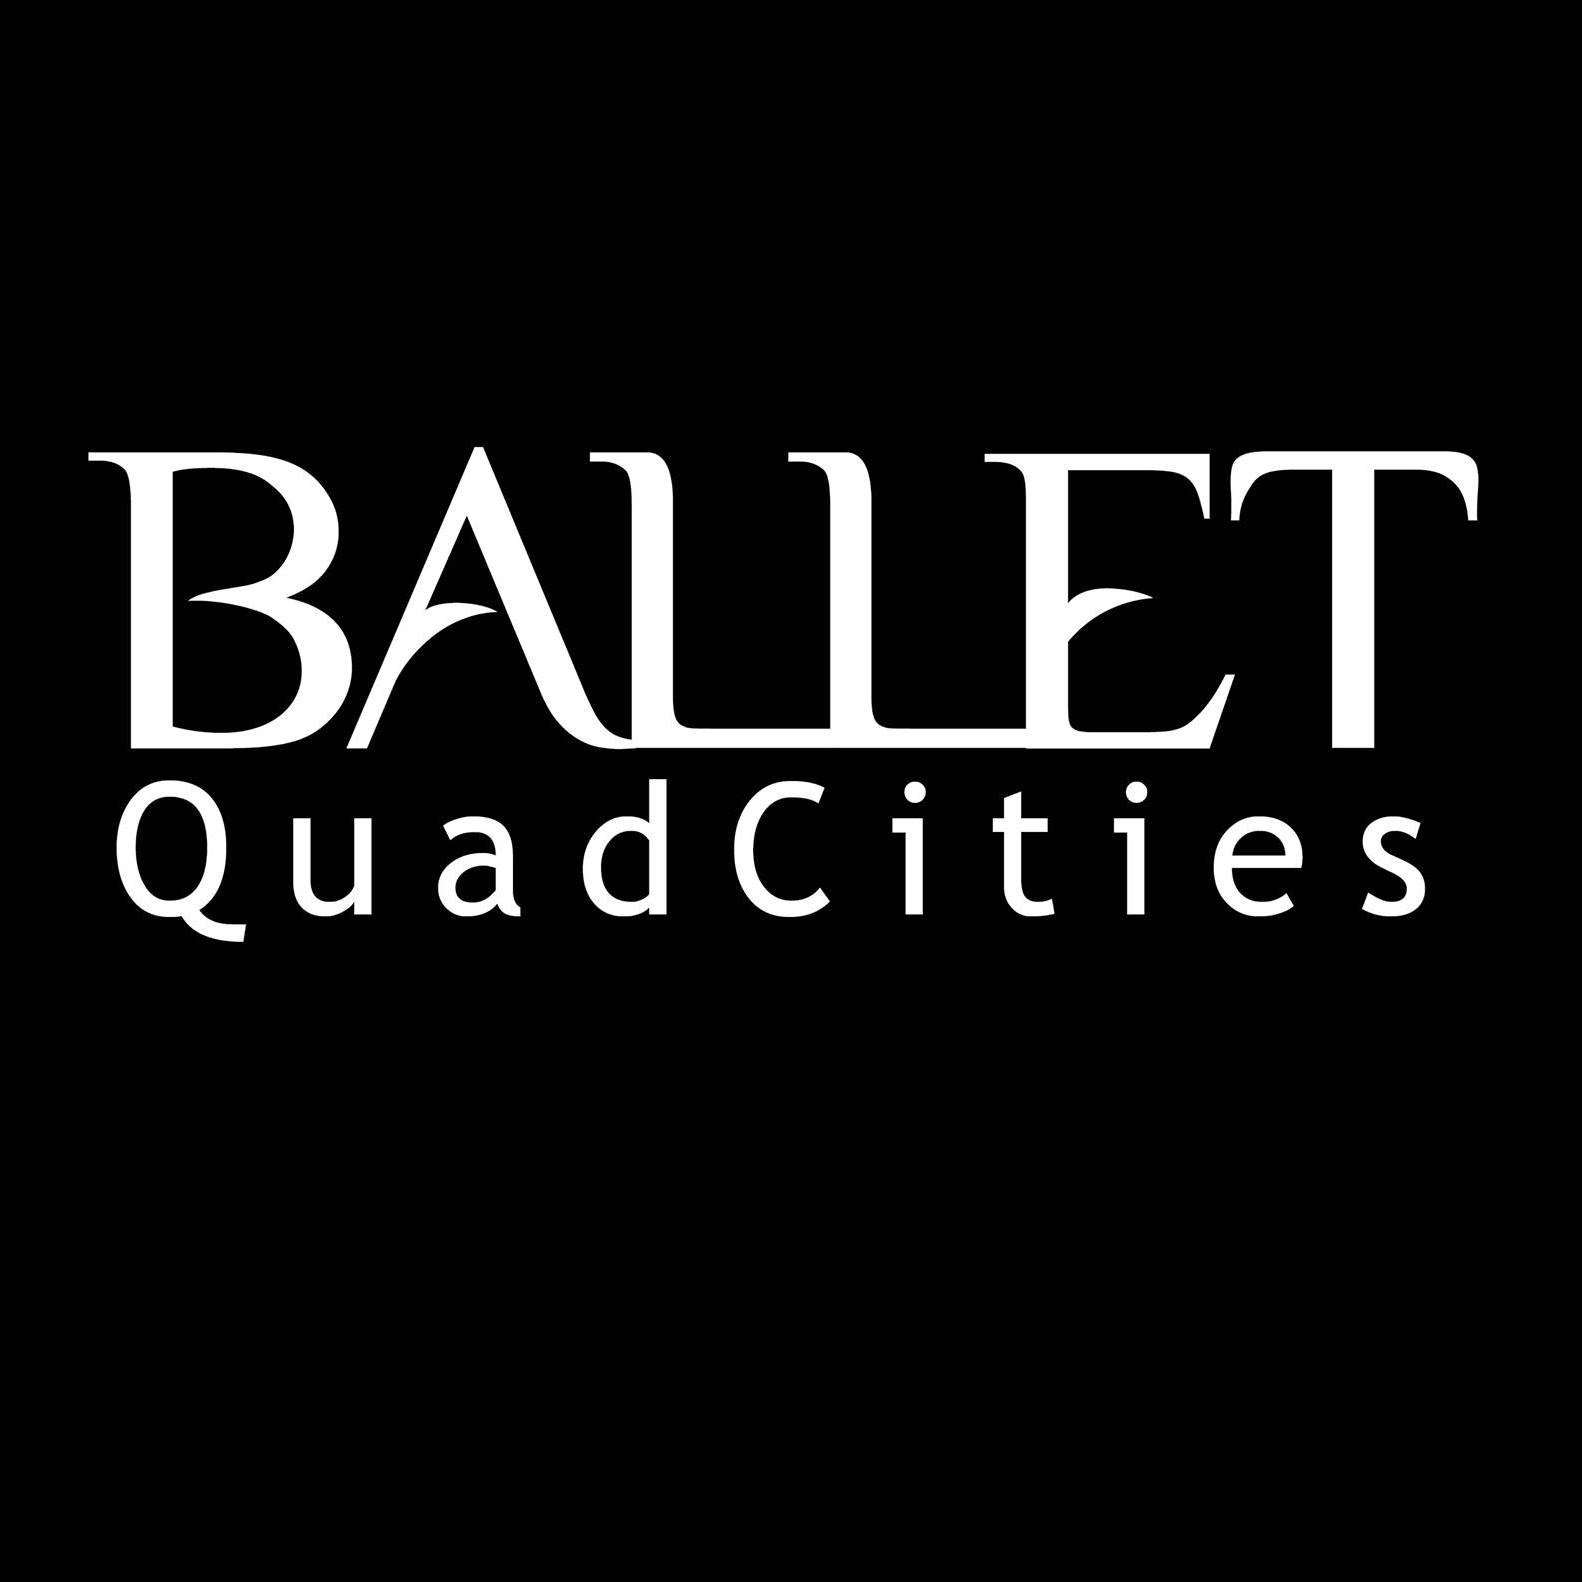 Ballet Quad Cities: The Rite of Spring at Adler Theatre